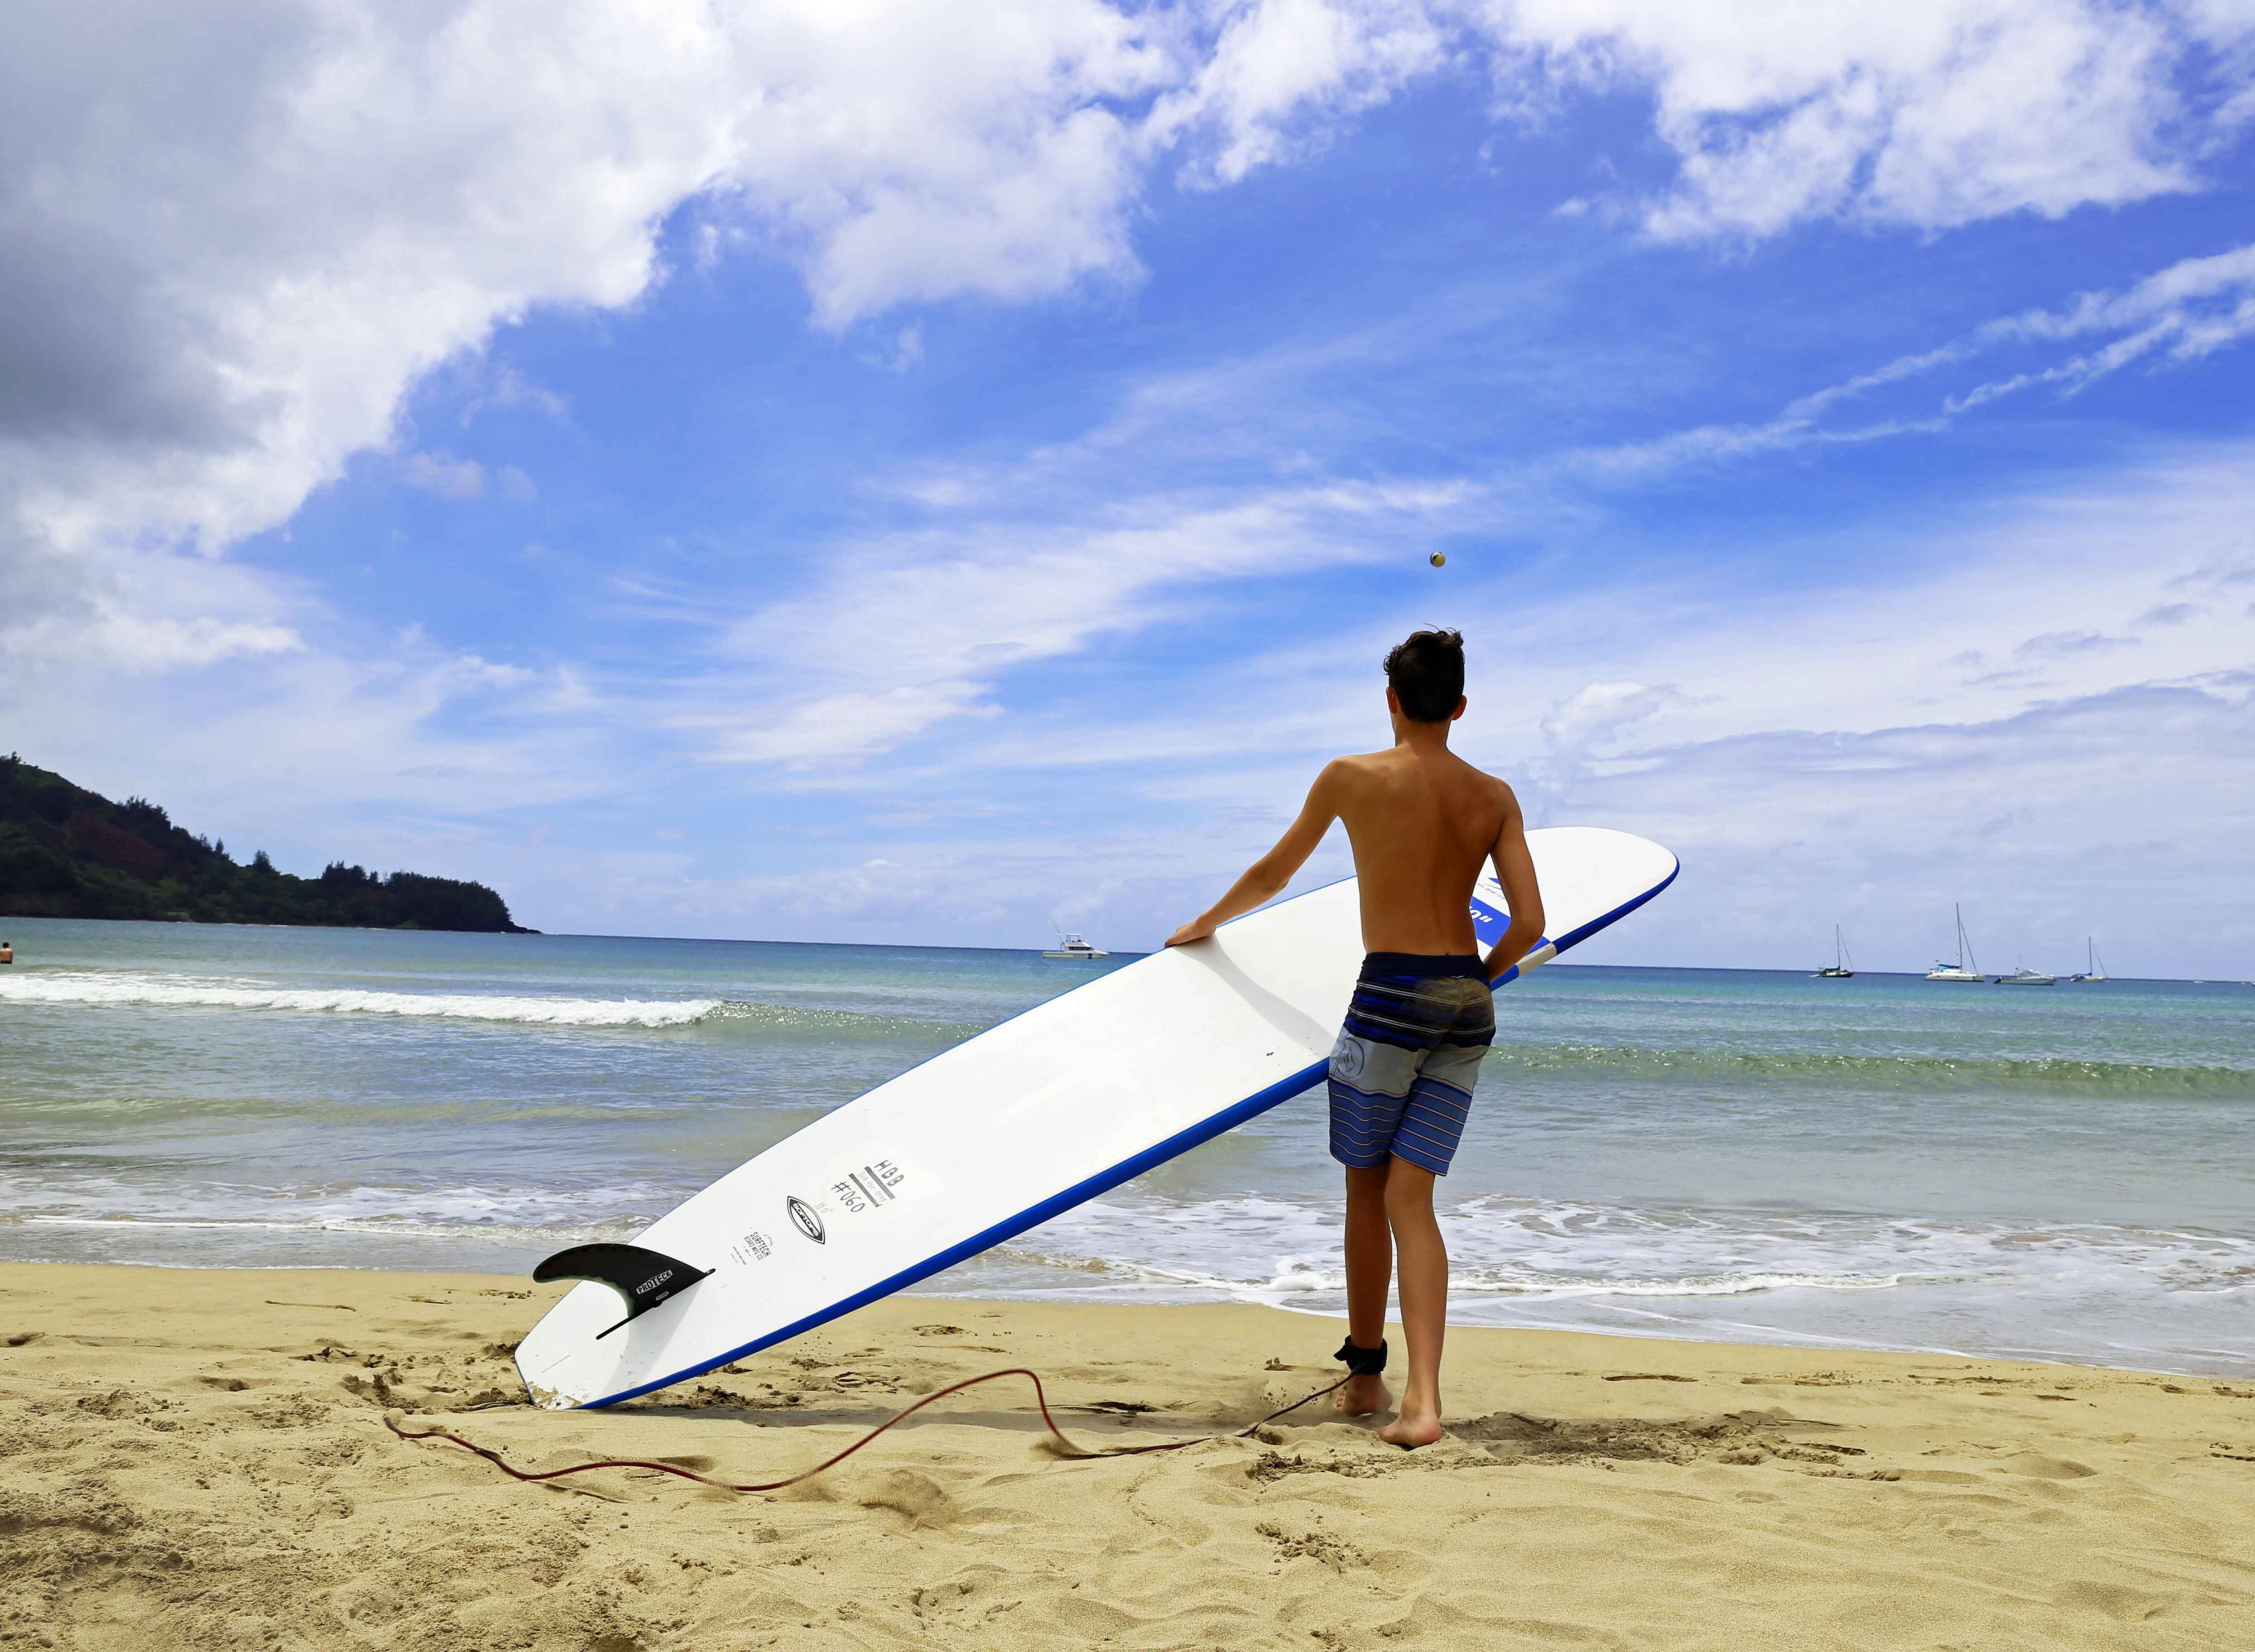 Kauai Hawaii Travel Guide. Surfing in Hanalei Bay